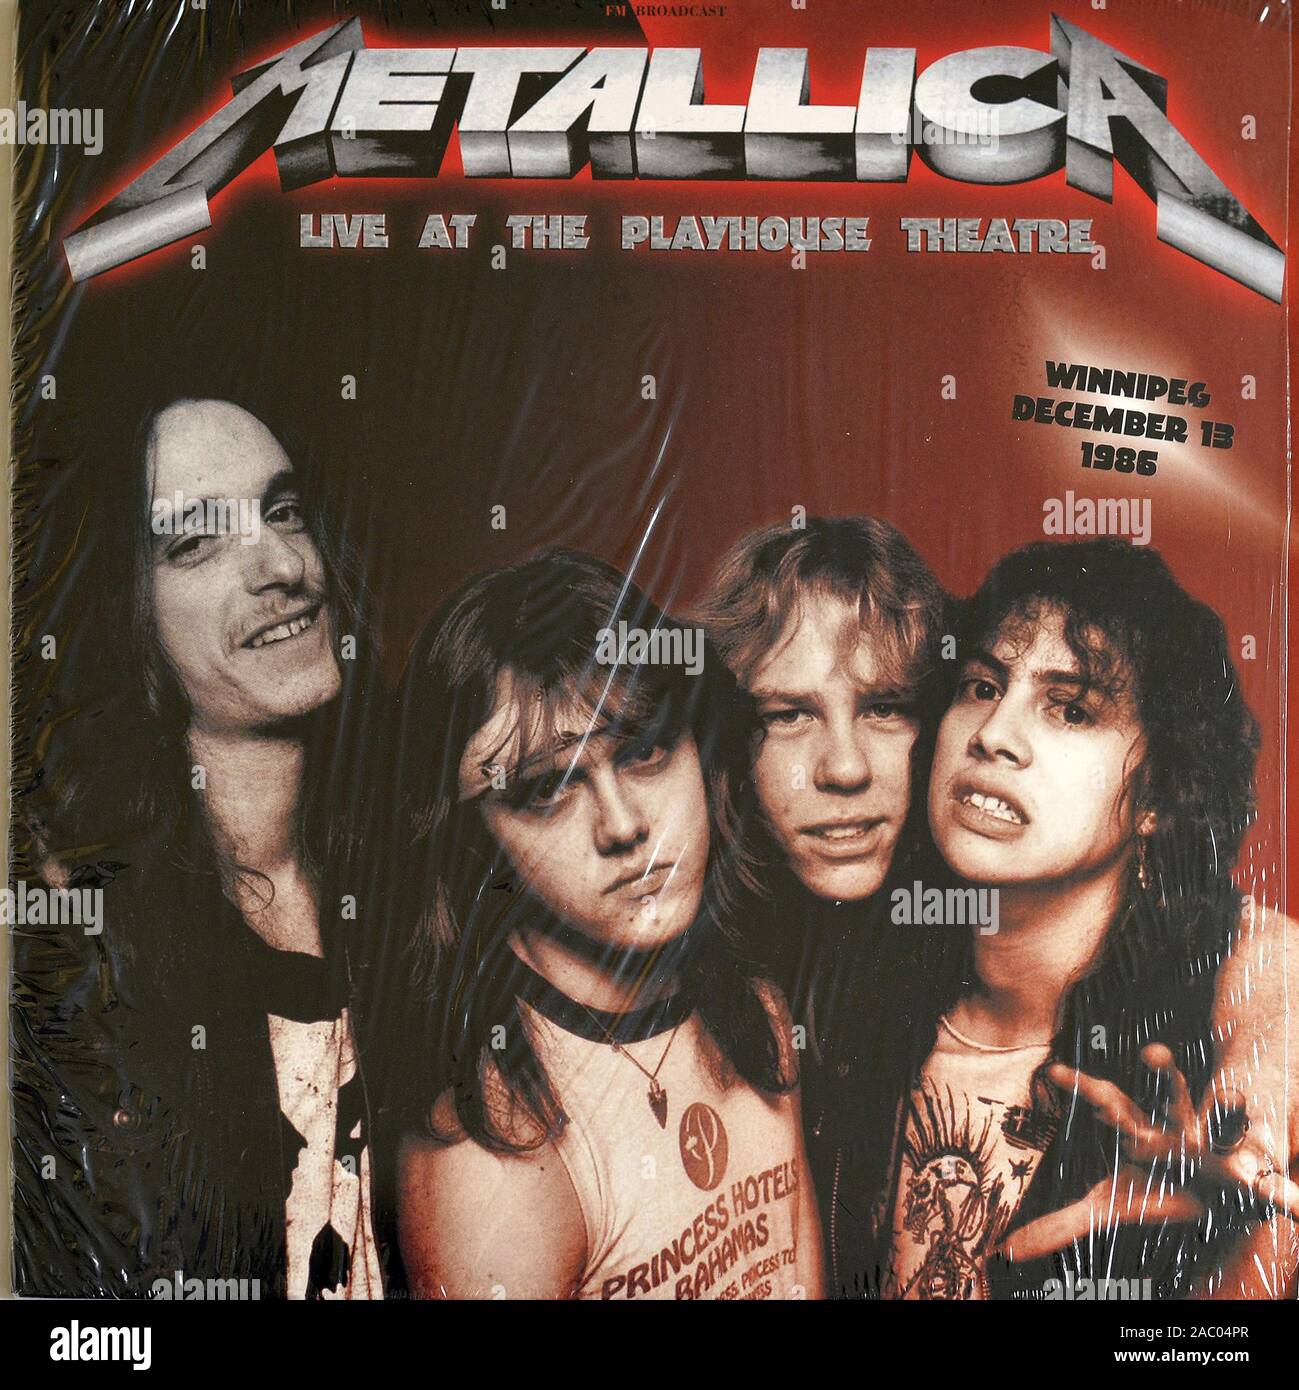 Metallica Live Im Playhouse Theatre Vintage Vinyl Album Cover Stockfotografie Alamy